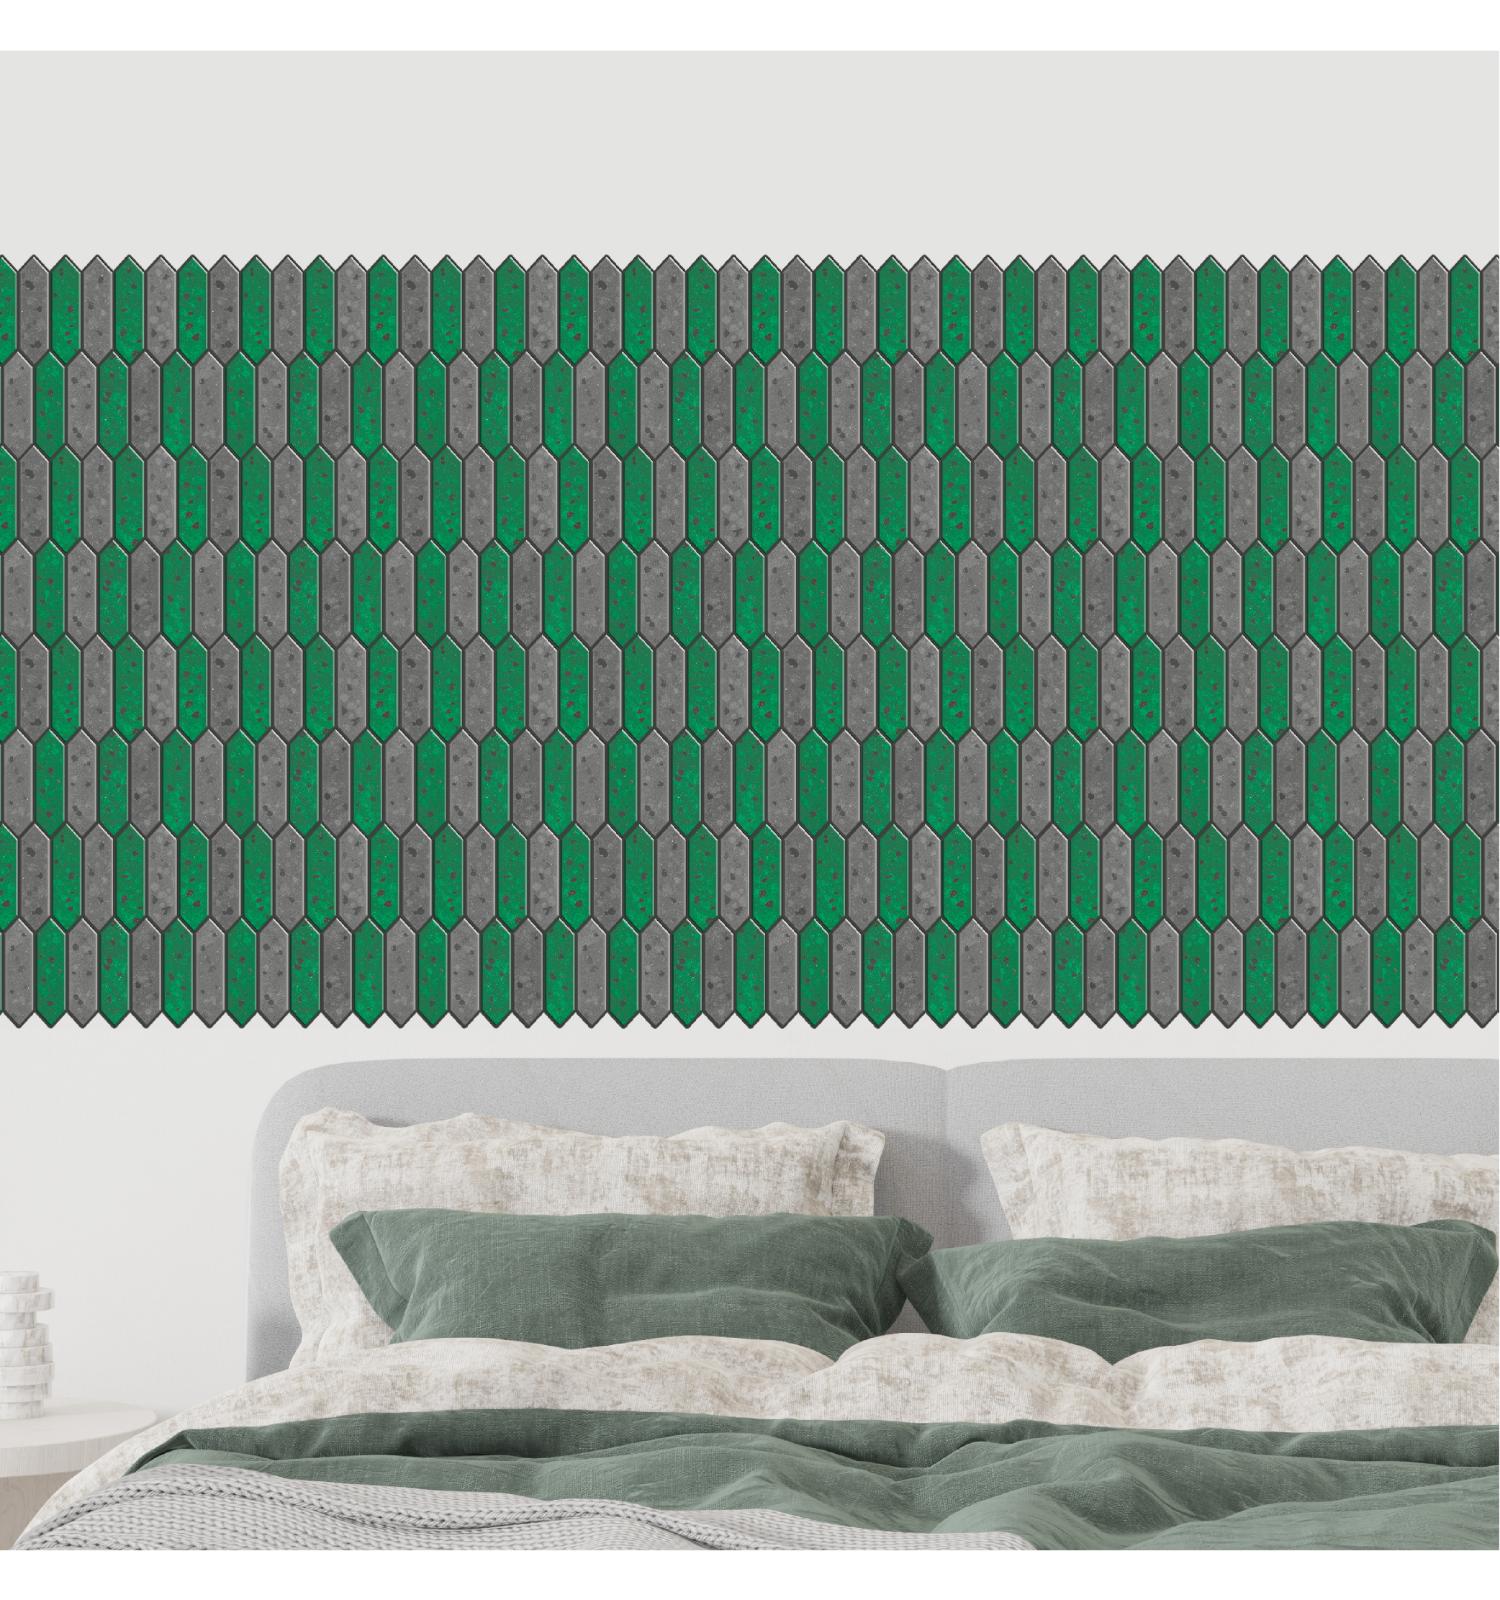 Green Long Hexagon Peel and Stick Wall Tile | Kitchen Backsplash Tiles | Self Adhesive Tiles For Home Decor